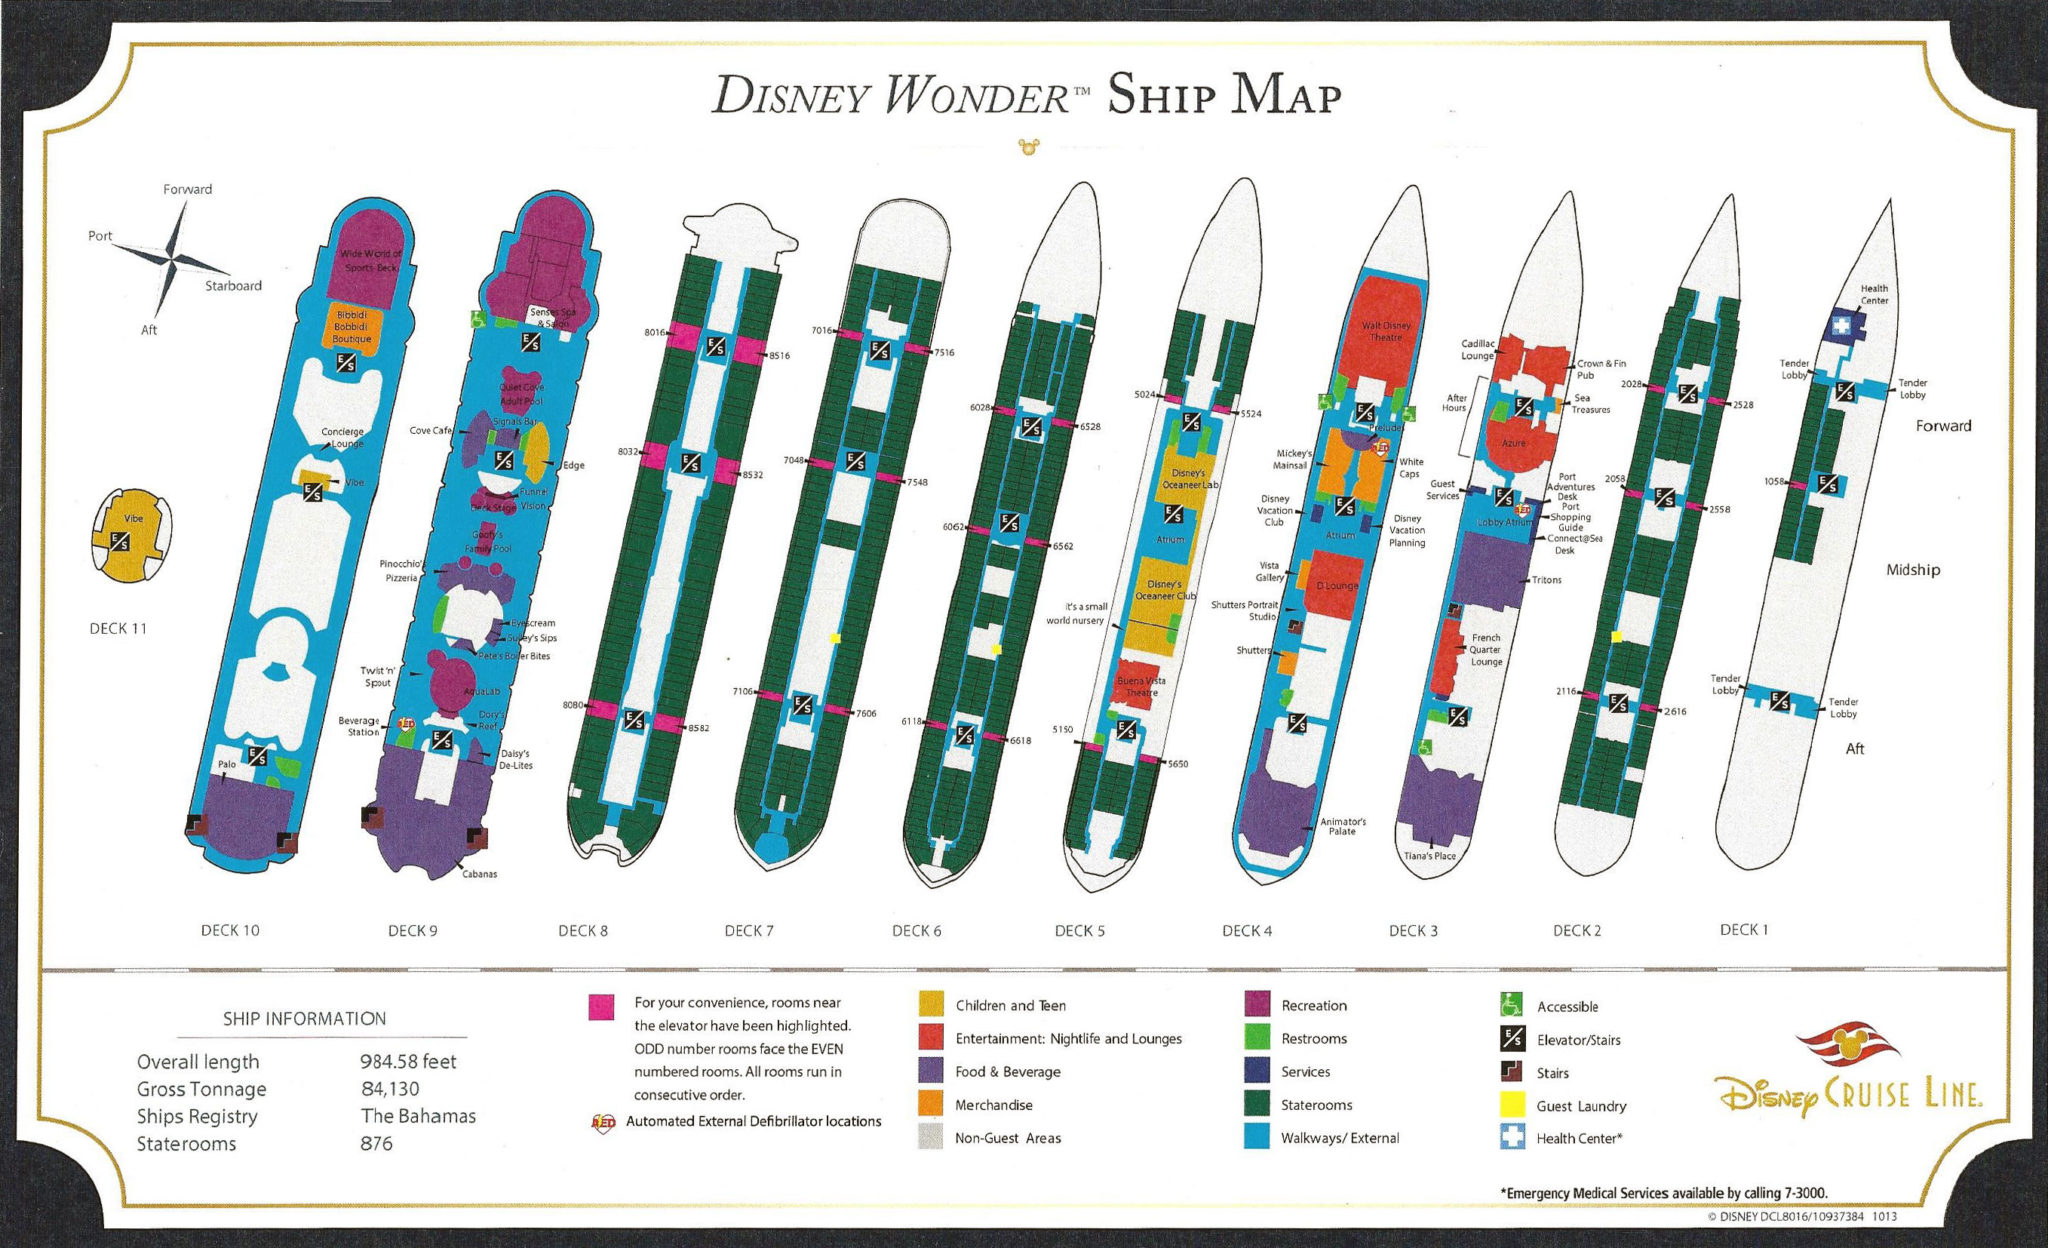 Deck Plans Disney Magic & Disney Wonder • The Disney